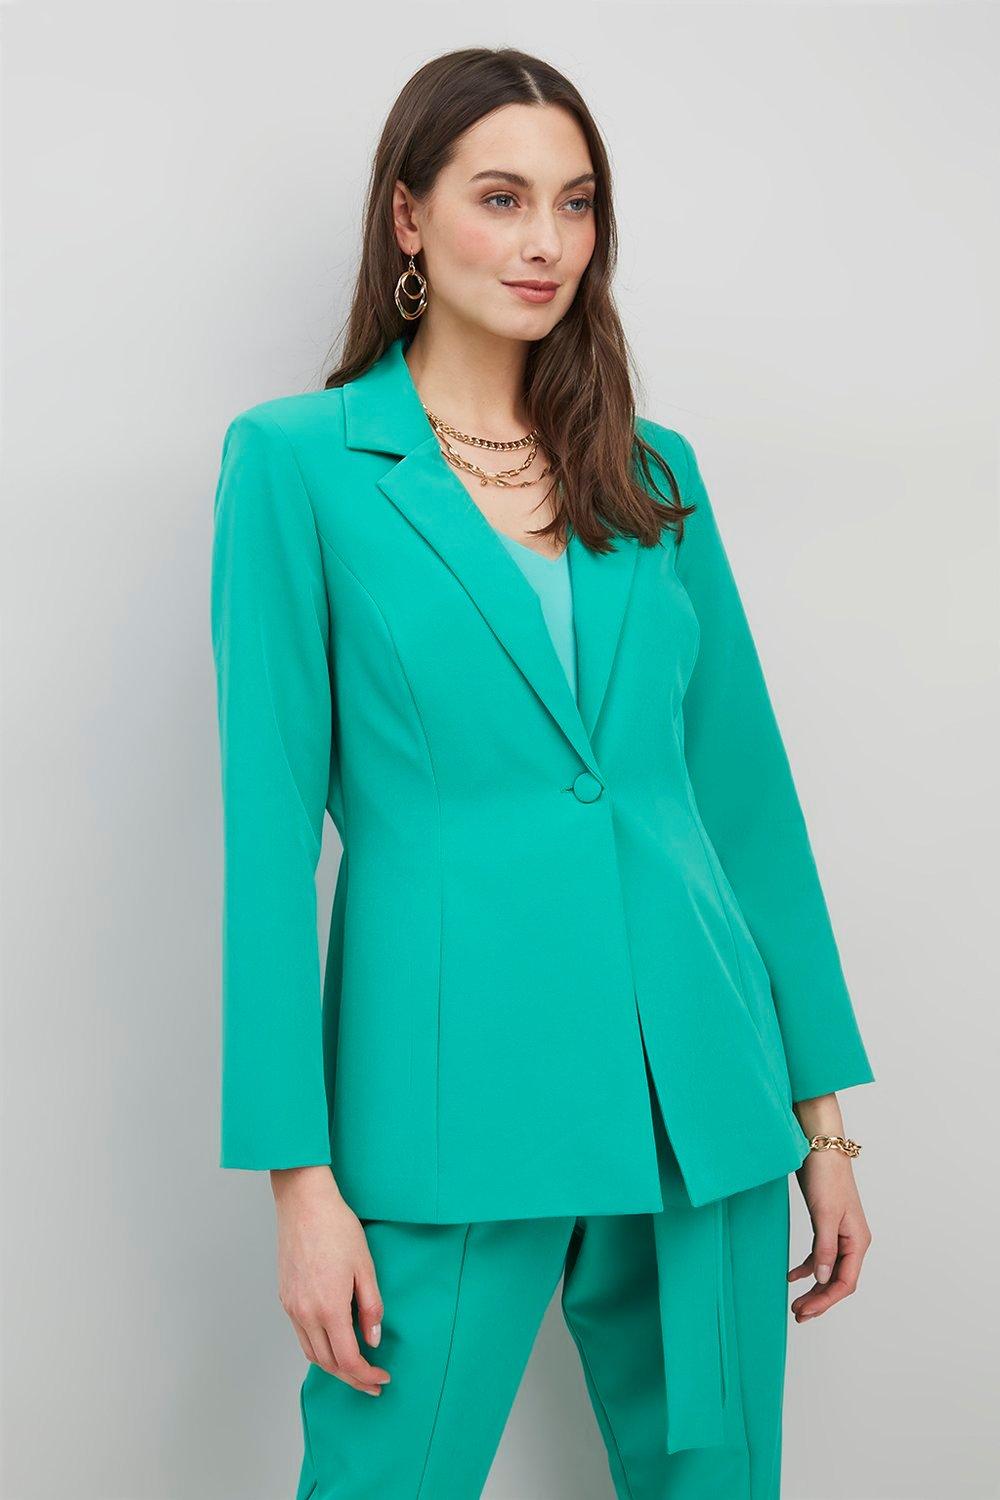 Jackets & Coats | Emerald Green Blazer Jacket | Wallis